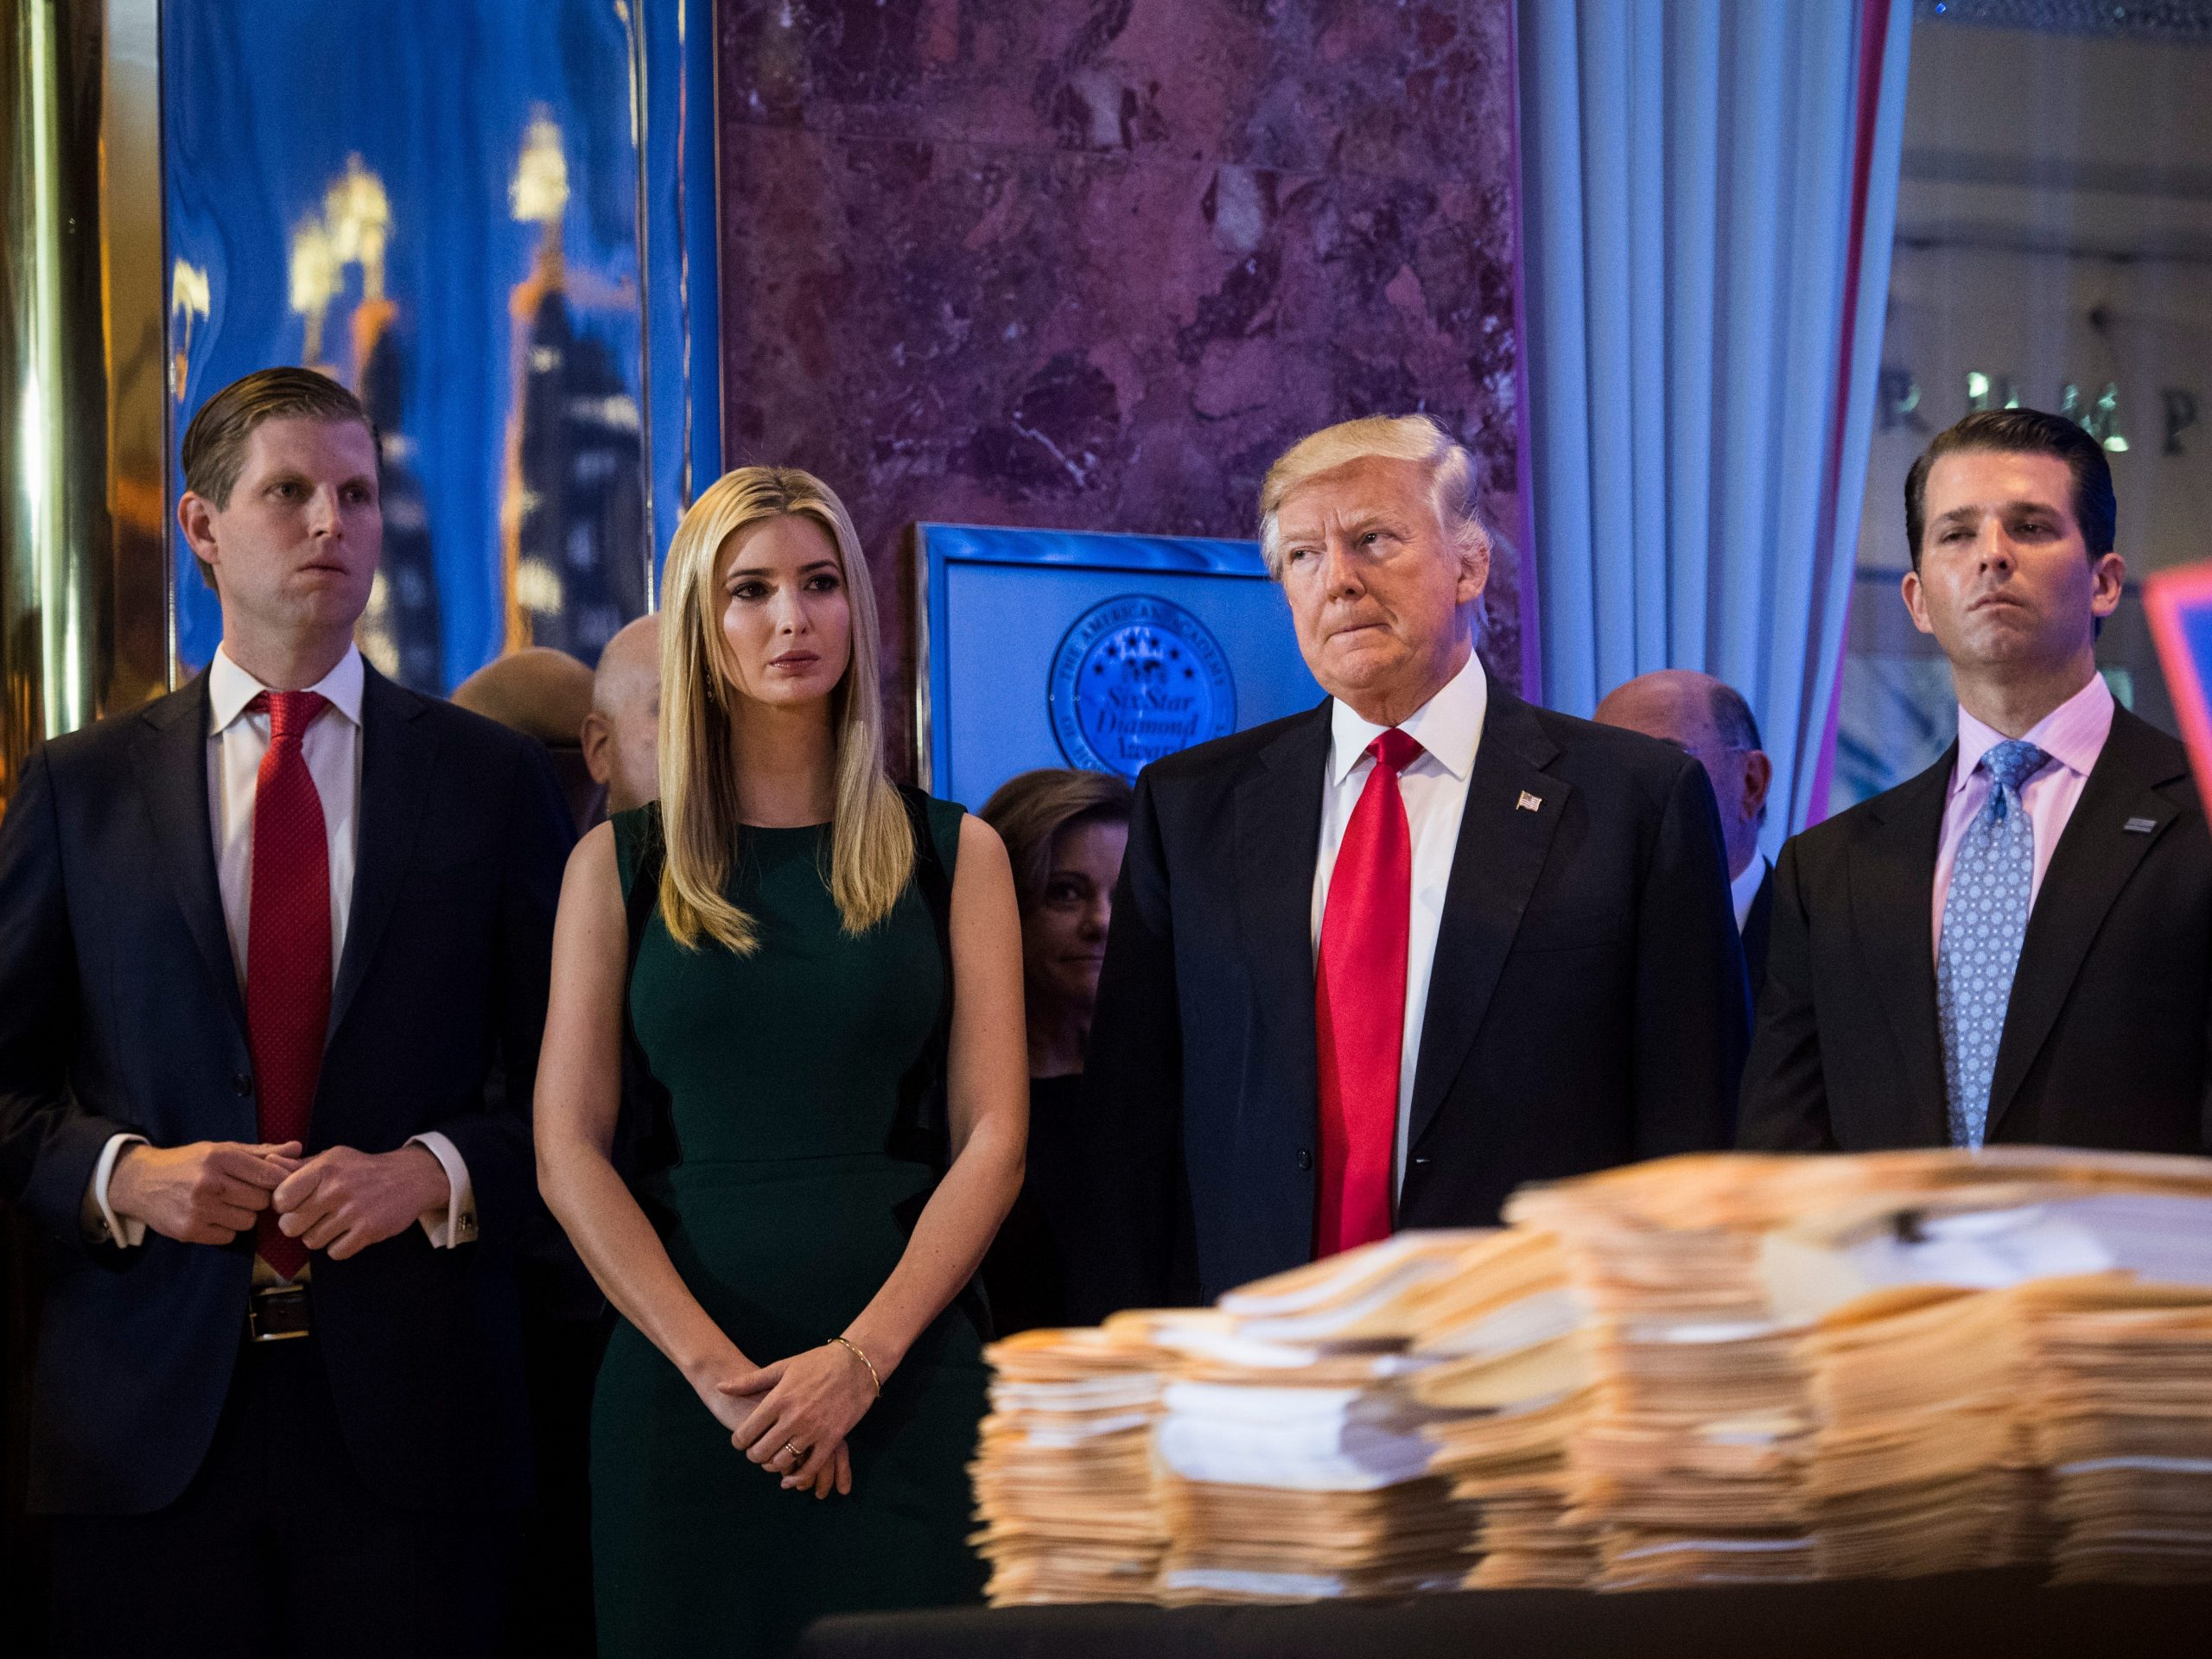 Eric Trump, Ivanka Trump, Donald Trump, and Donald Trump Jr. pictured at Trump Tower